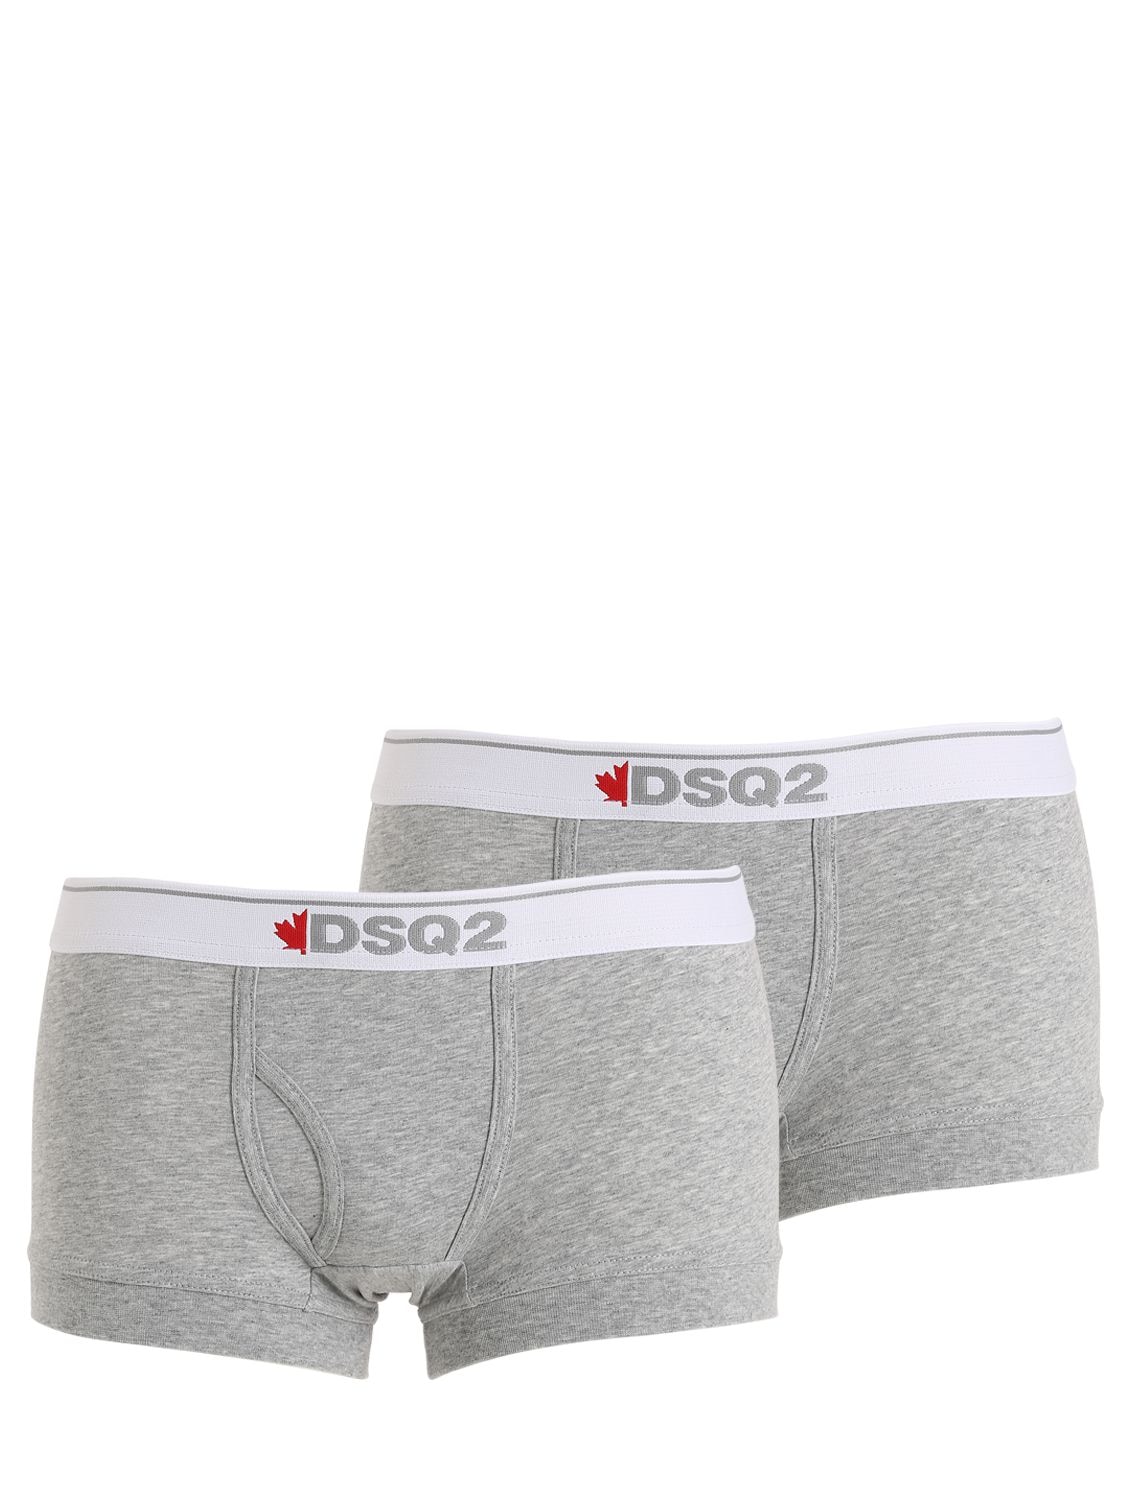 Dsquared2 Underwear Pack Of 2 Cotton Jersey Boxer Briefs In Heather Grey